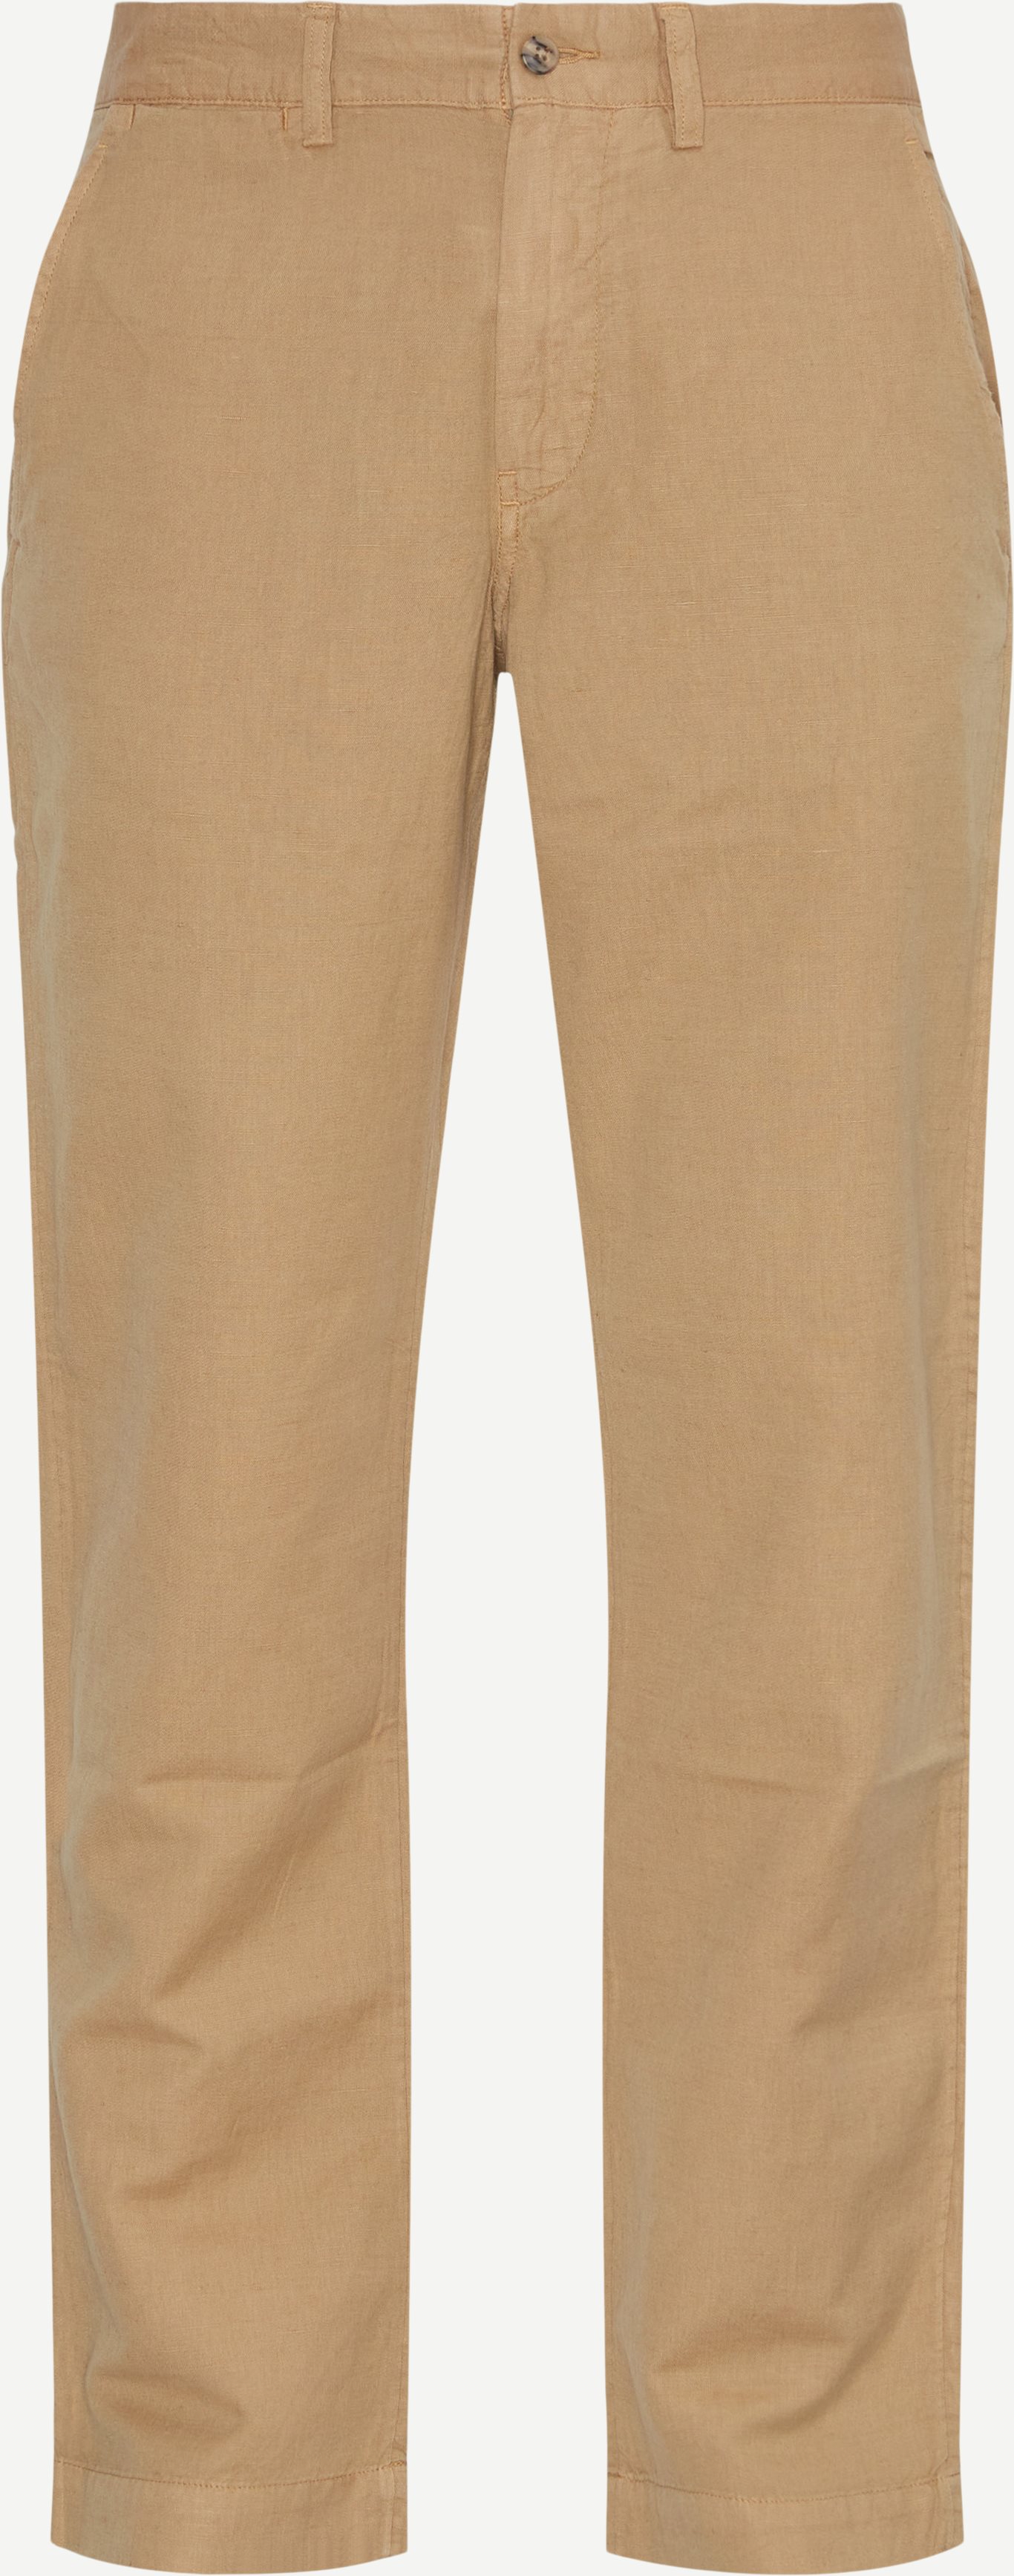 Polo Ralph Lauren Trousers 710901796 Sand